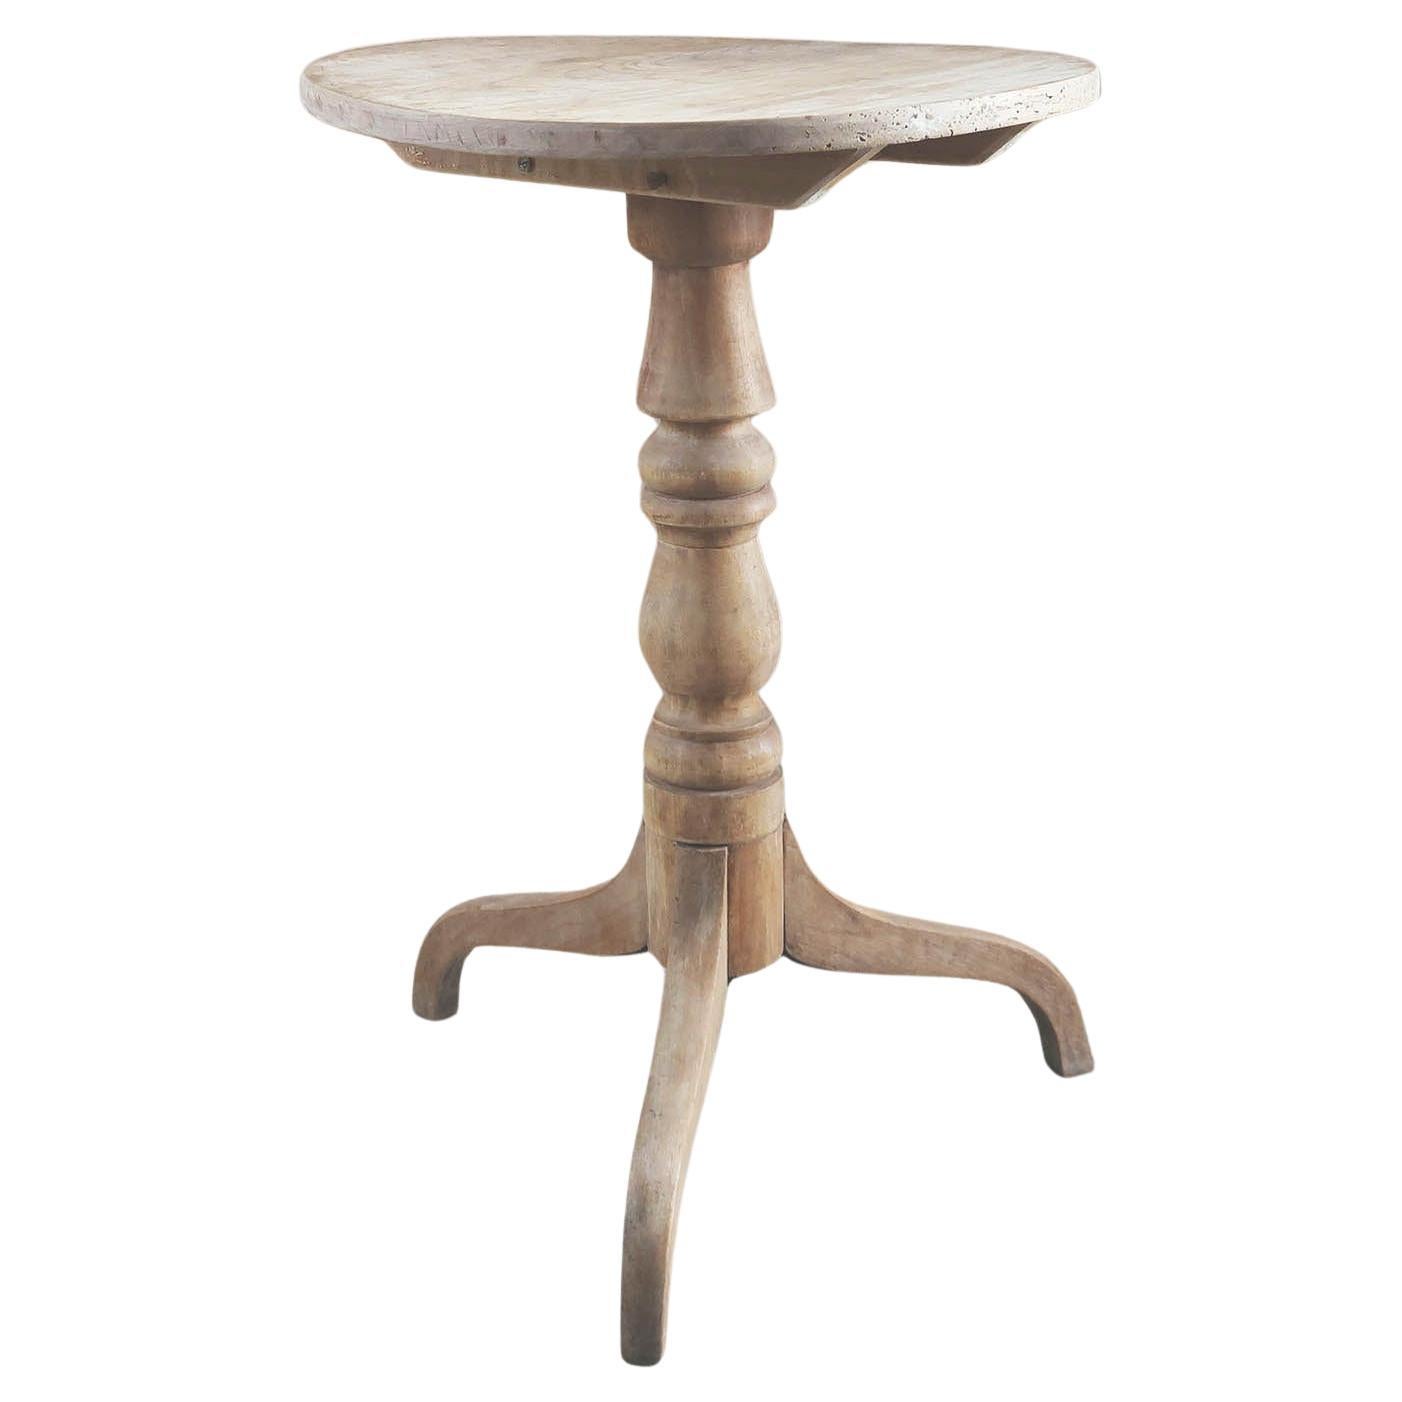 Petite table d'appoint ronde ancienne en orme blanchi. Anglais, Circa 1820